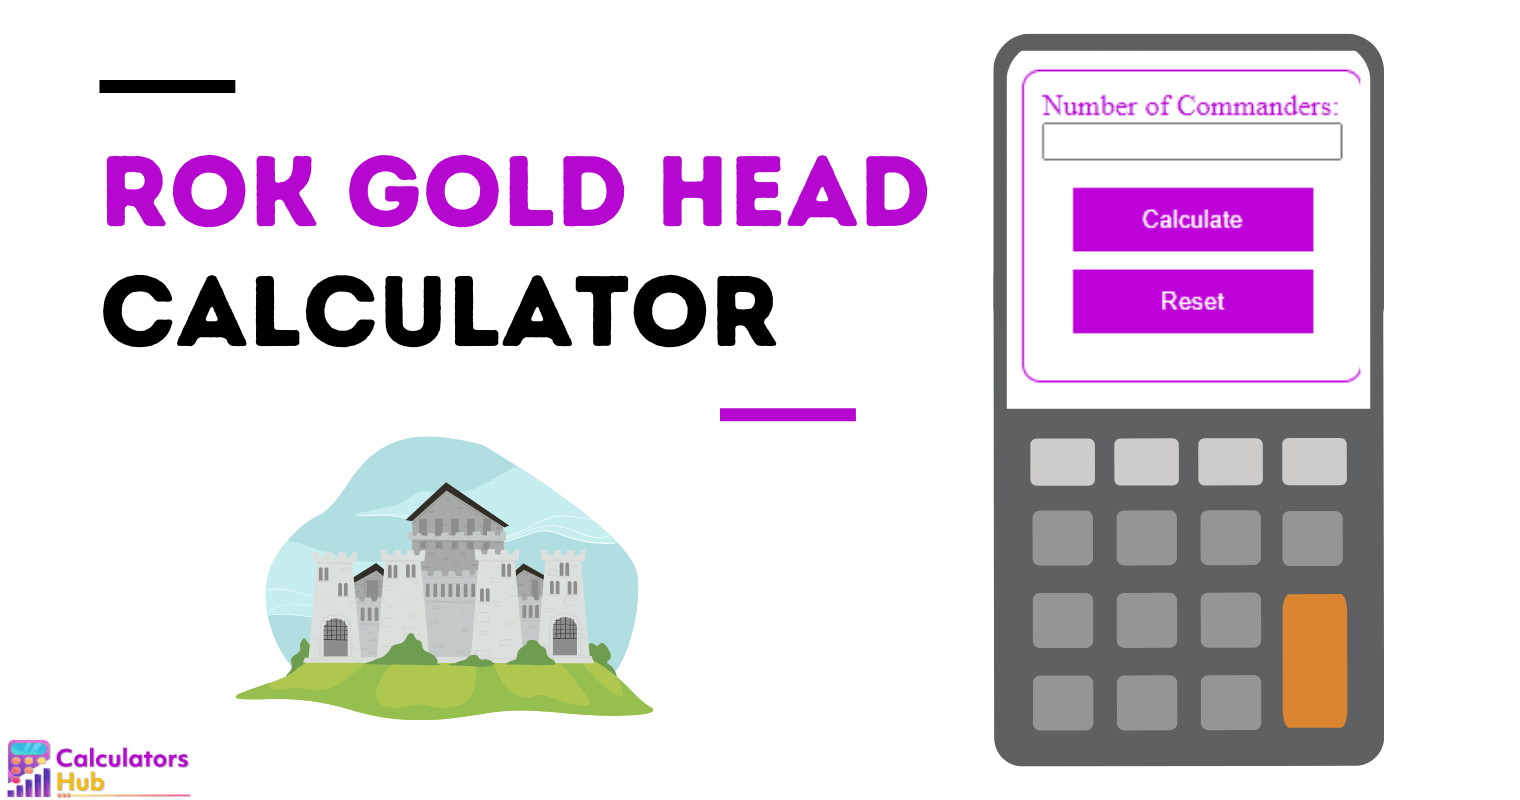 RoK Gold Head Calculator